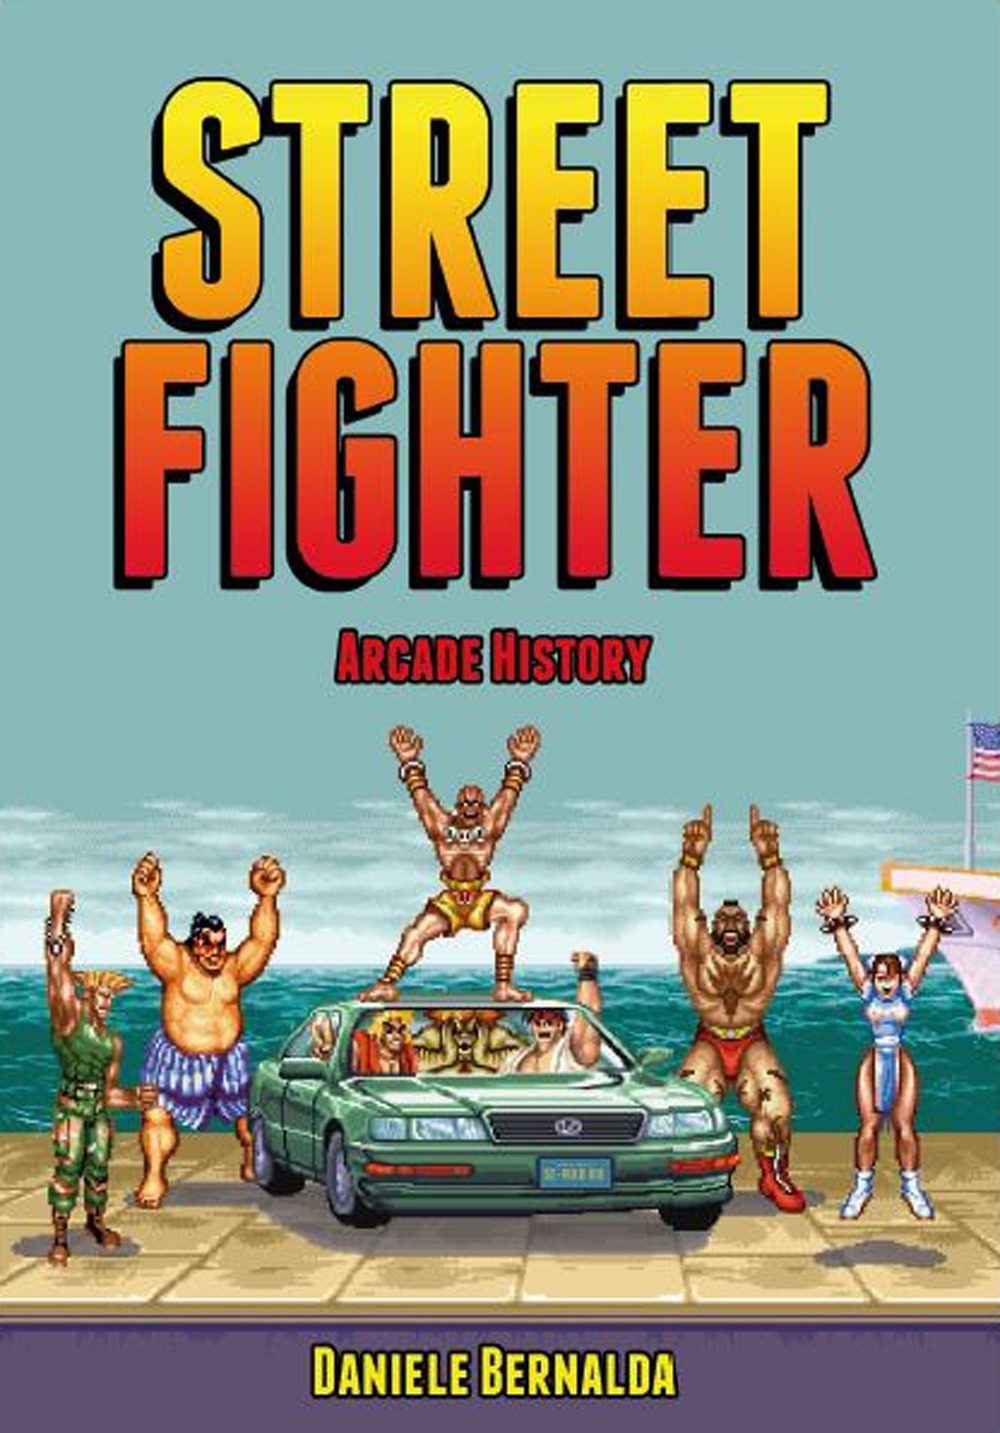 Street fighter arcade history